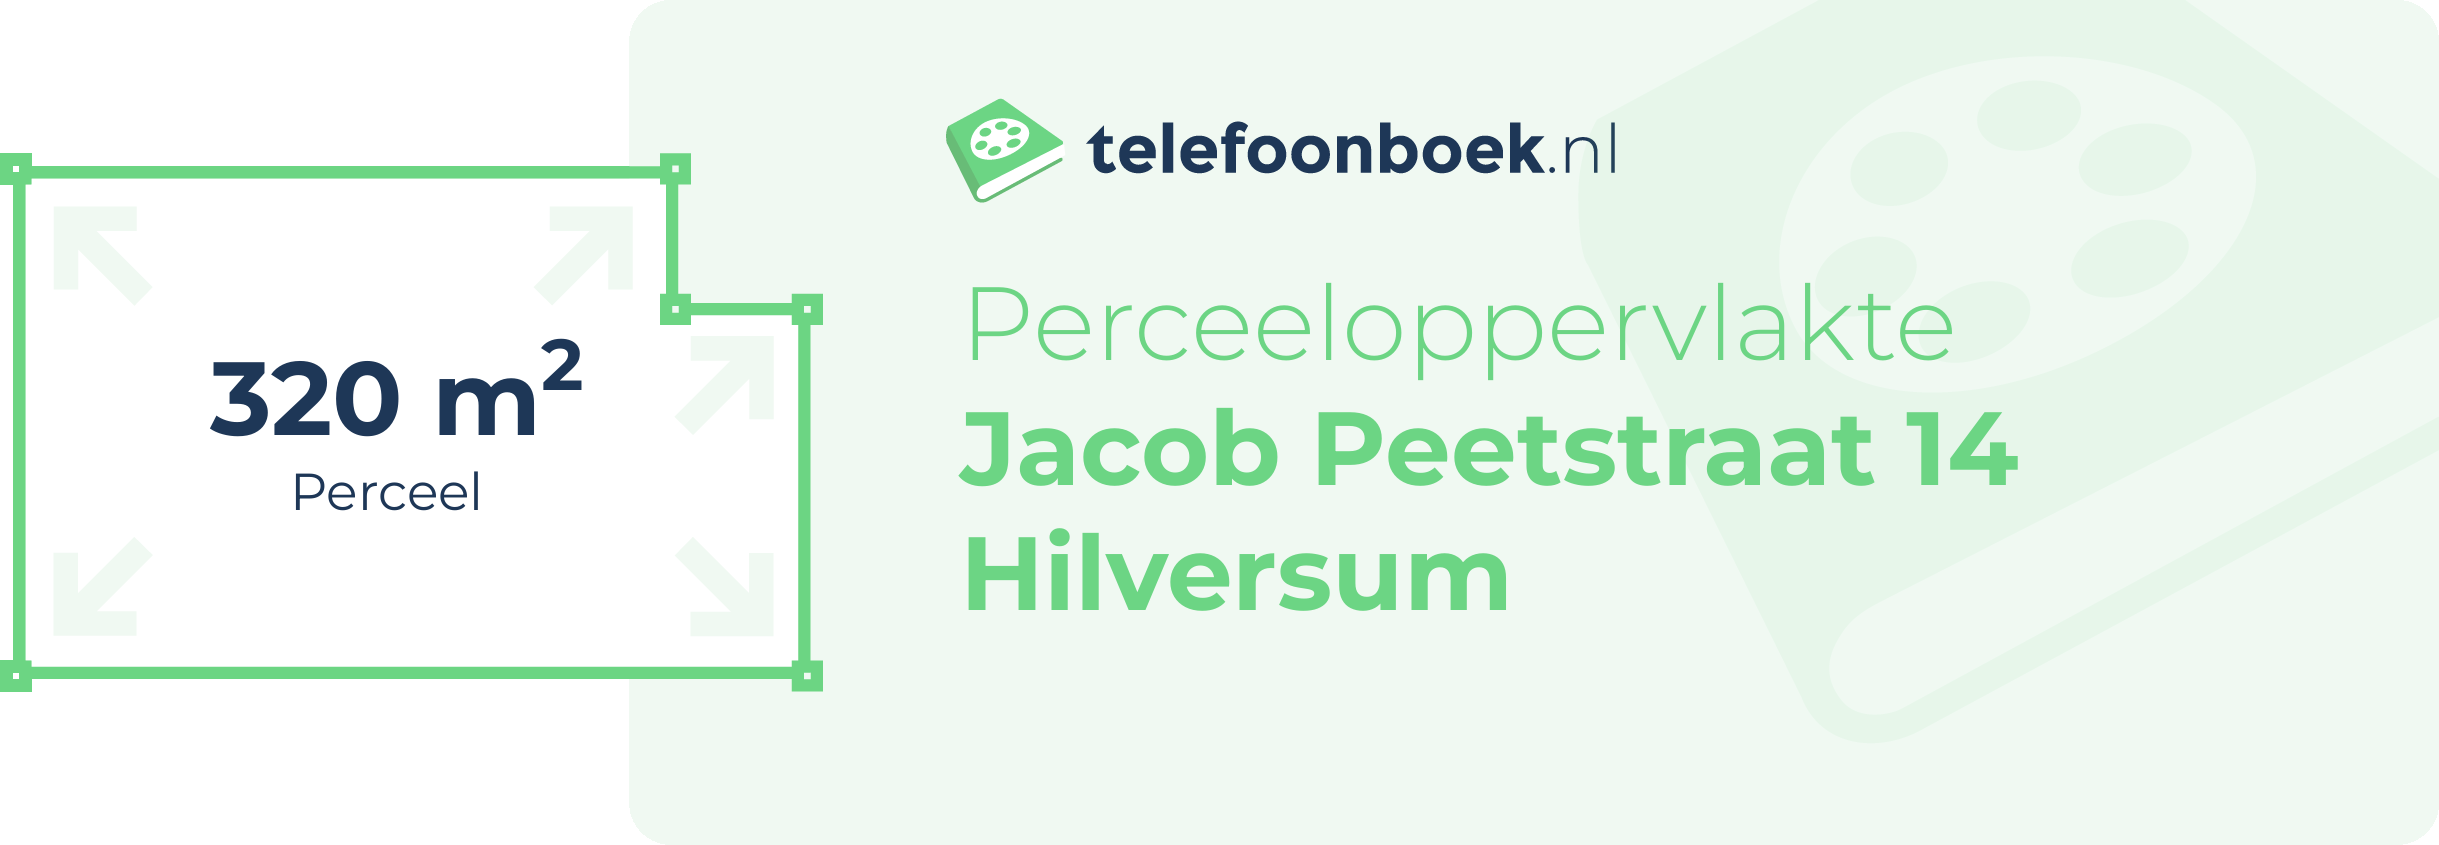 Perceeloppervlakte Jacob Peetstraat 14 Hilversum